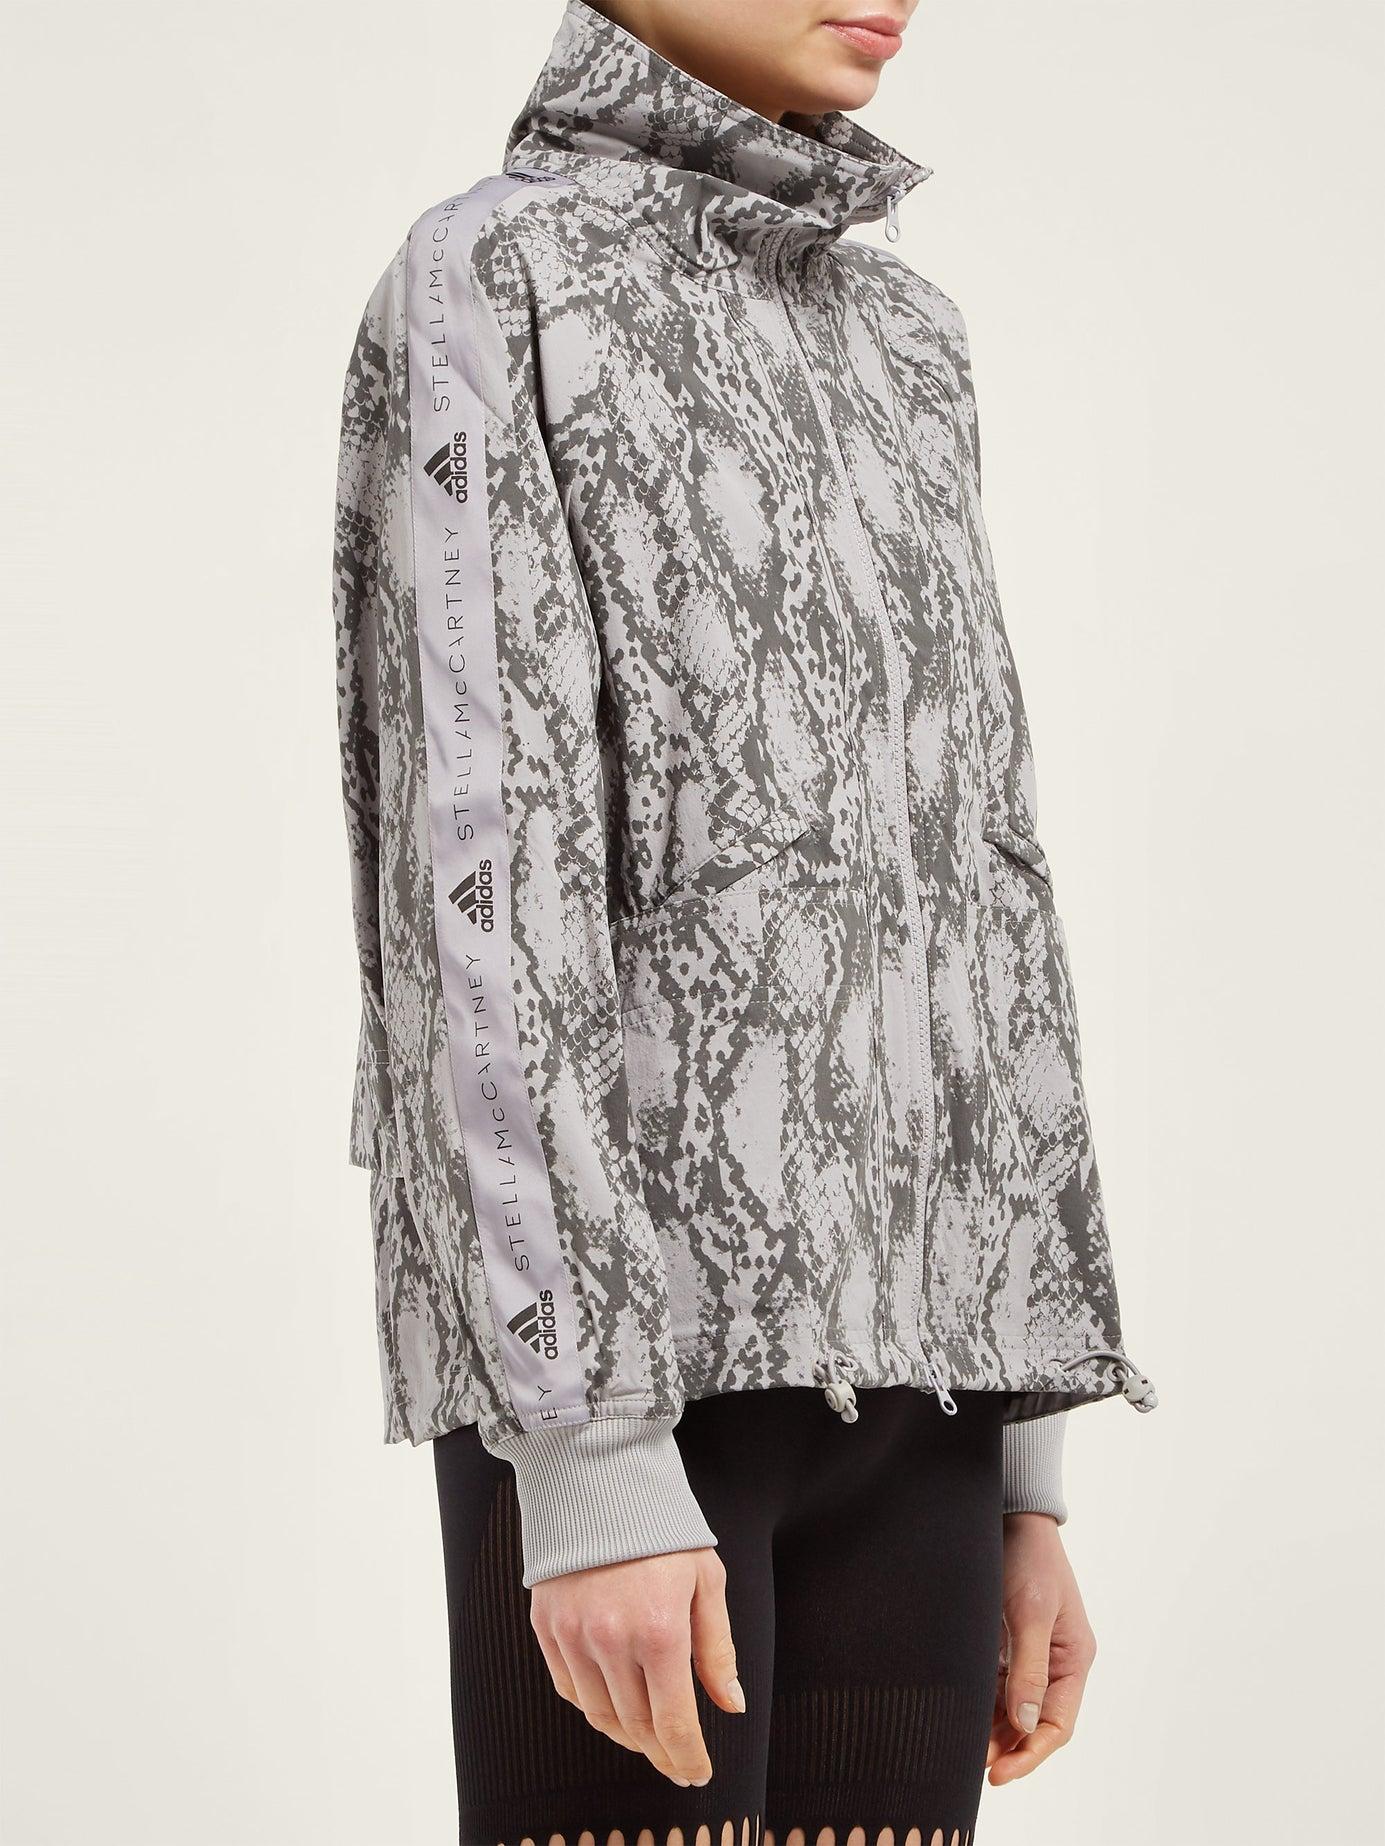 adidas By Stella McCartney Snake-print Performance Jacket in Gray | Lyst